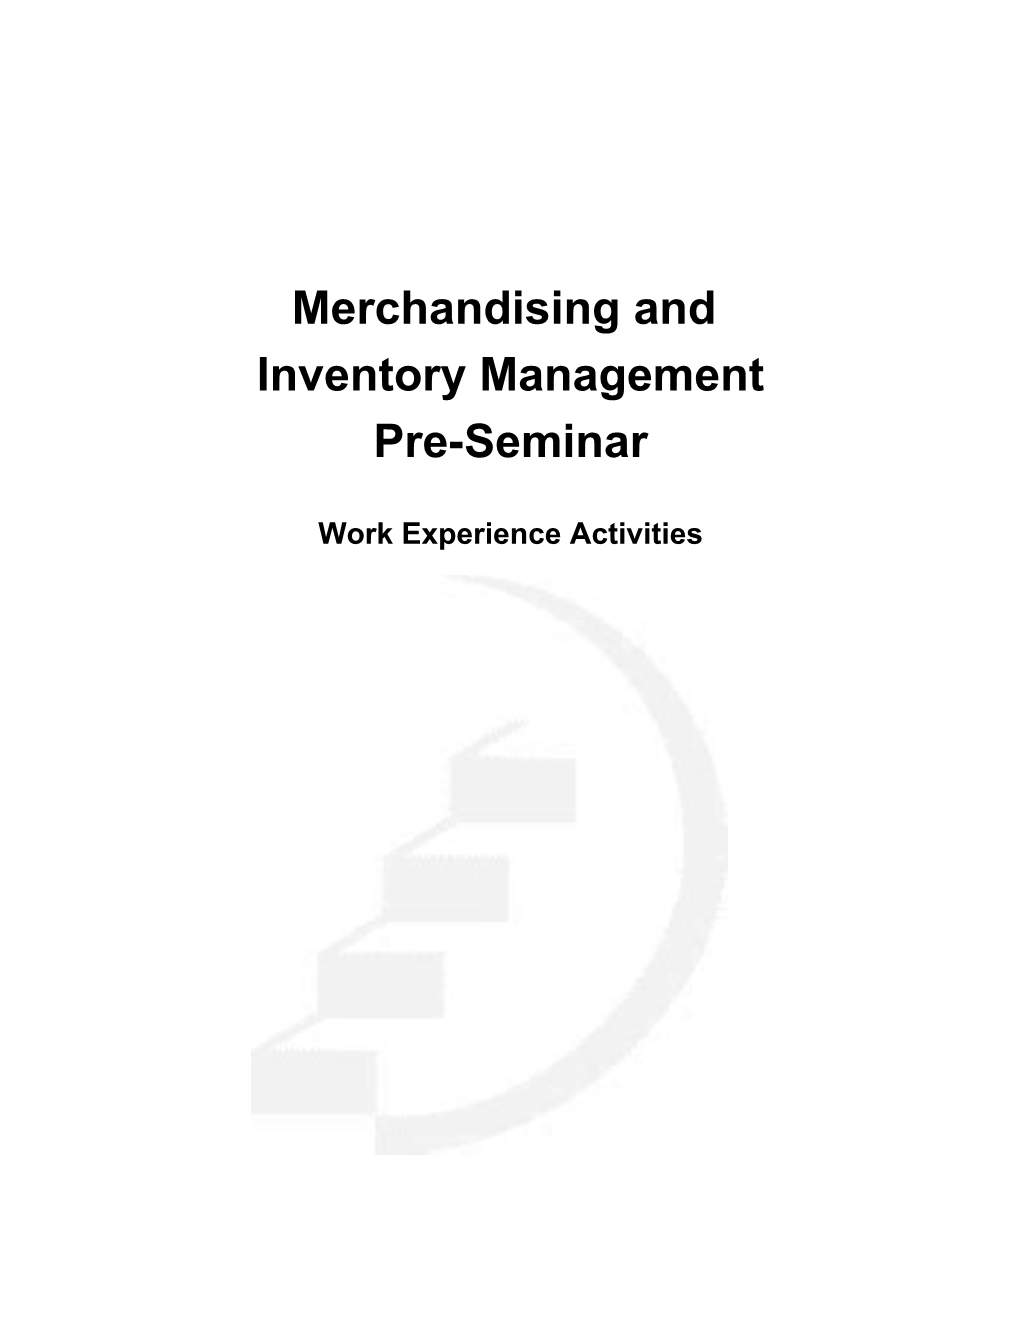 Merchandising and Inventory Management Pre-Seminar